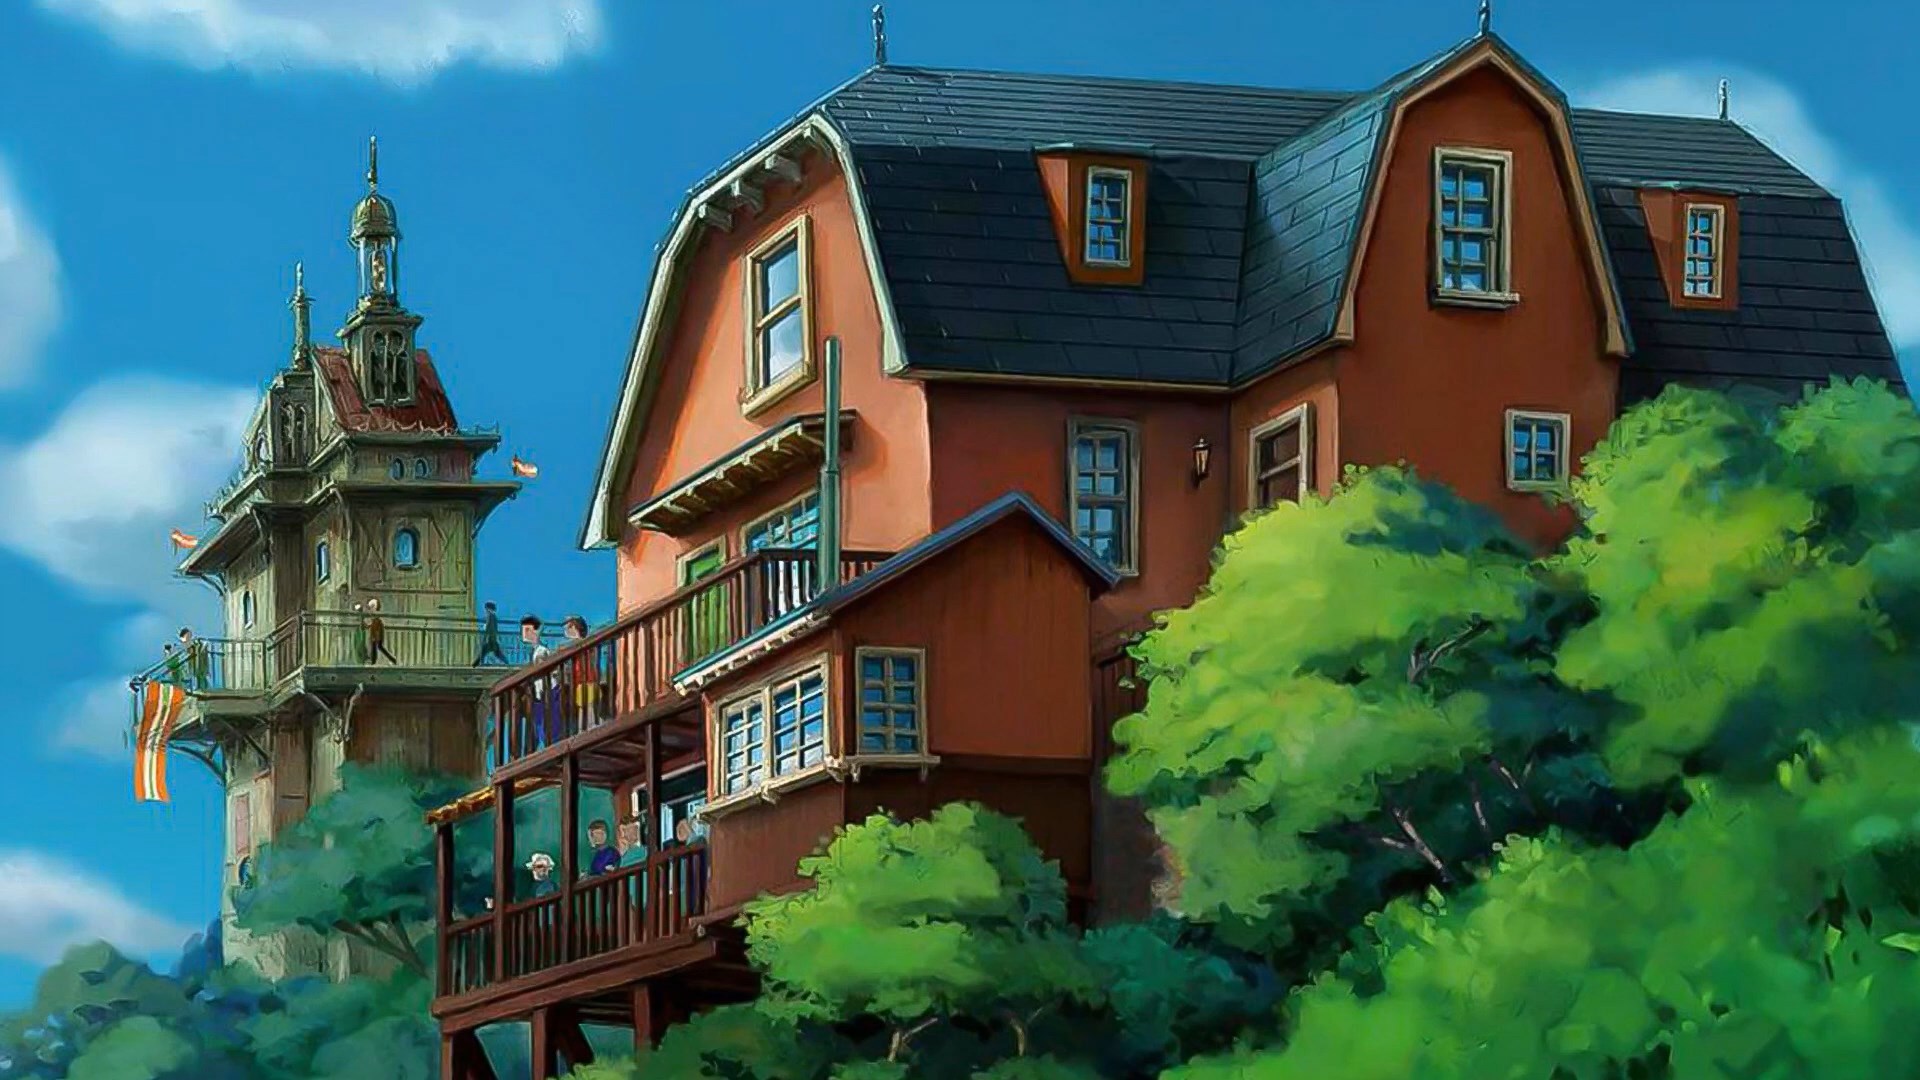 【Autumn Ghibli 】 ジブリ映画のサントラピアノメドレーh.jpg